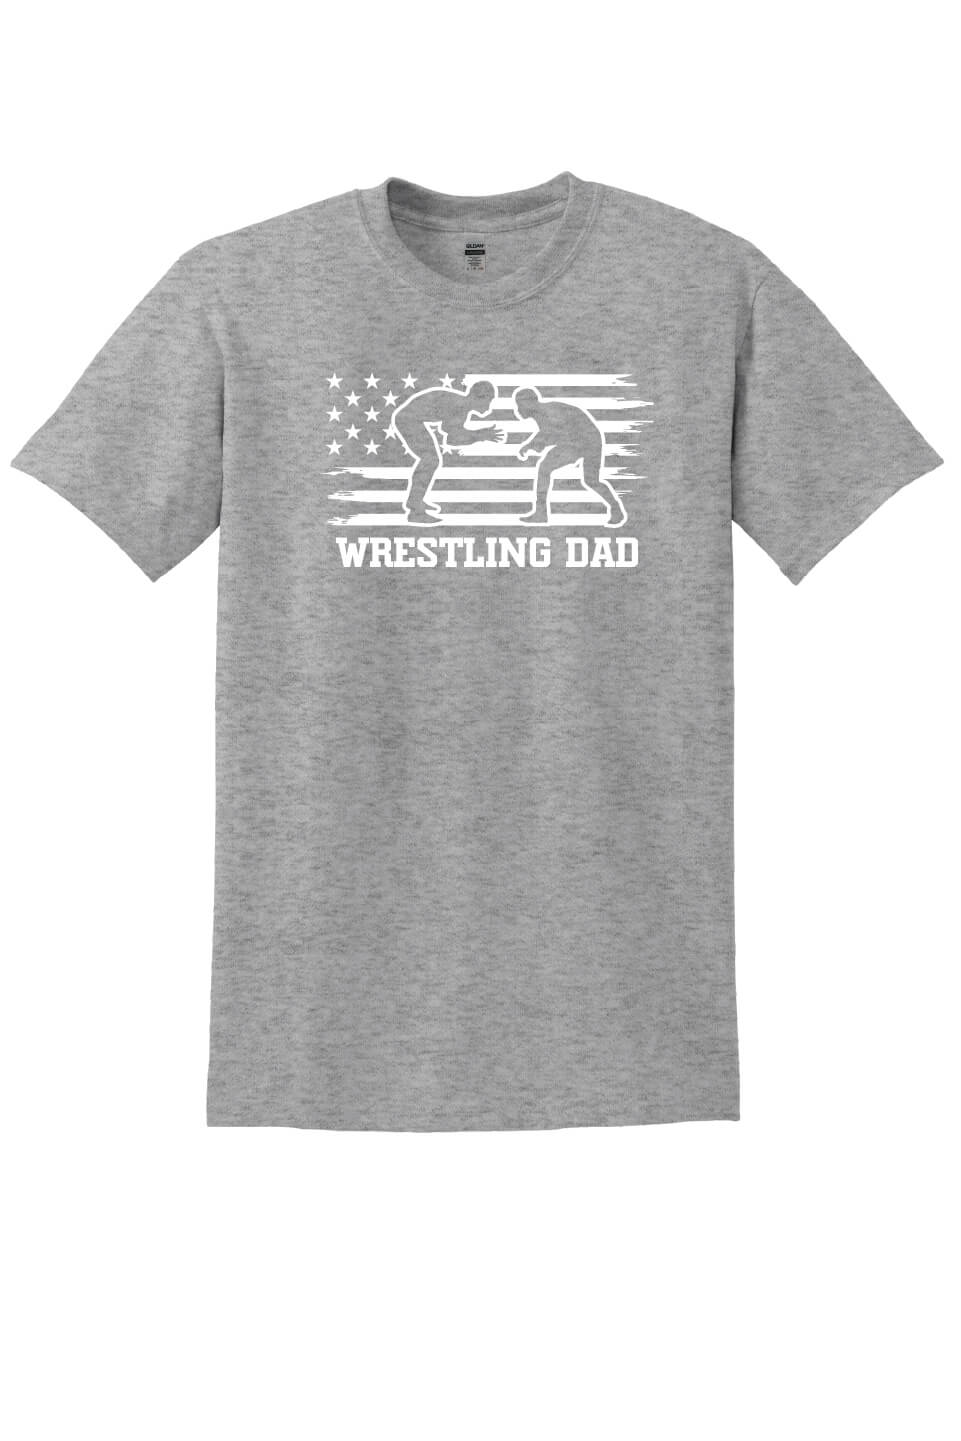 Wrestling Dad Short Sleeve T-Shirt gray